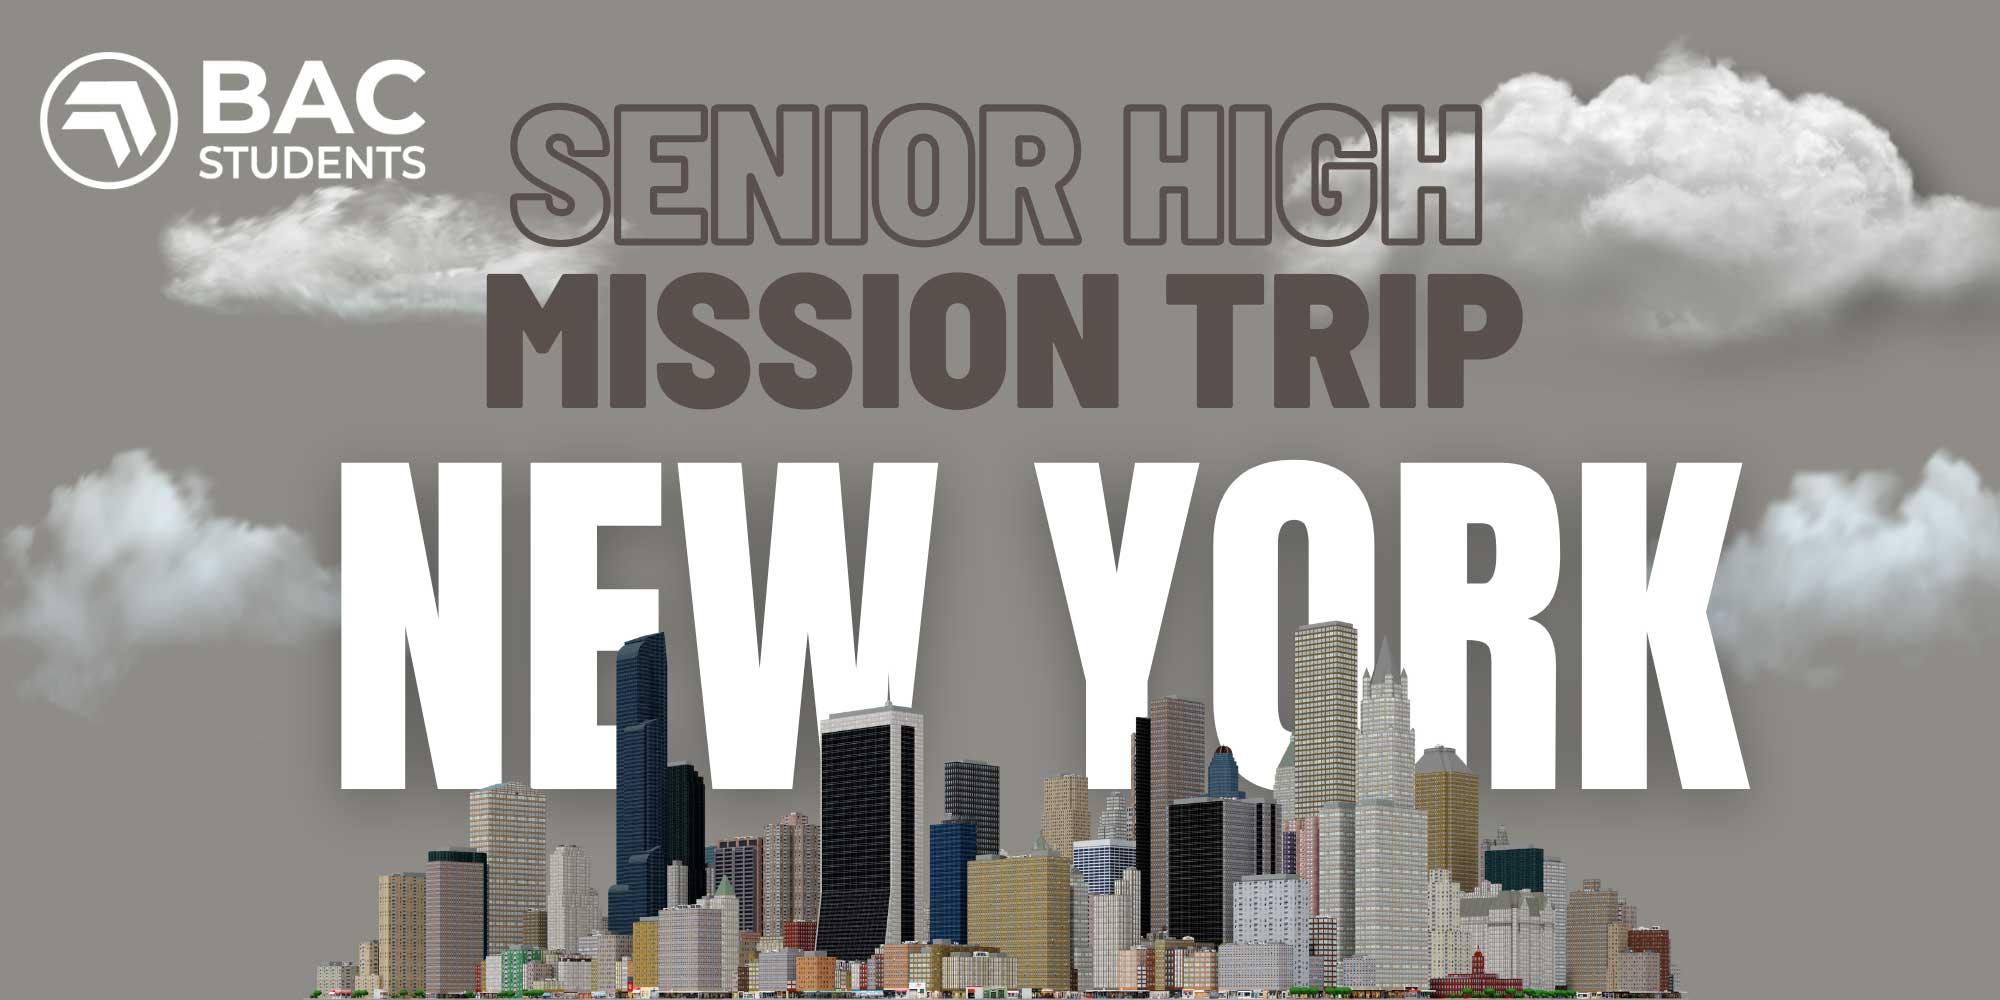 Senior High Mission Trip